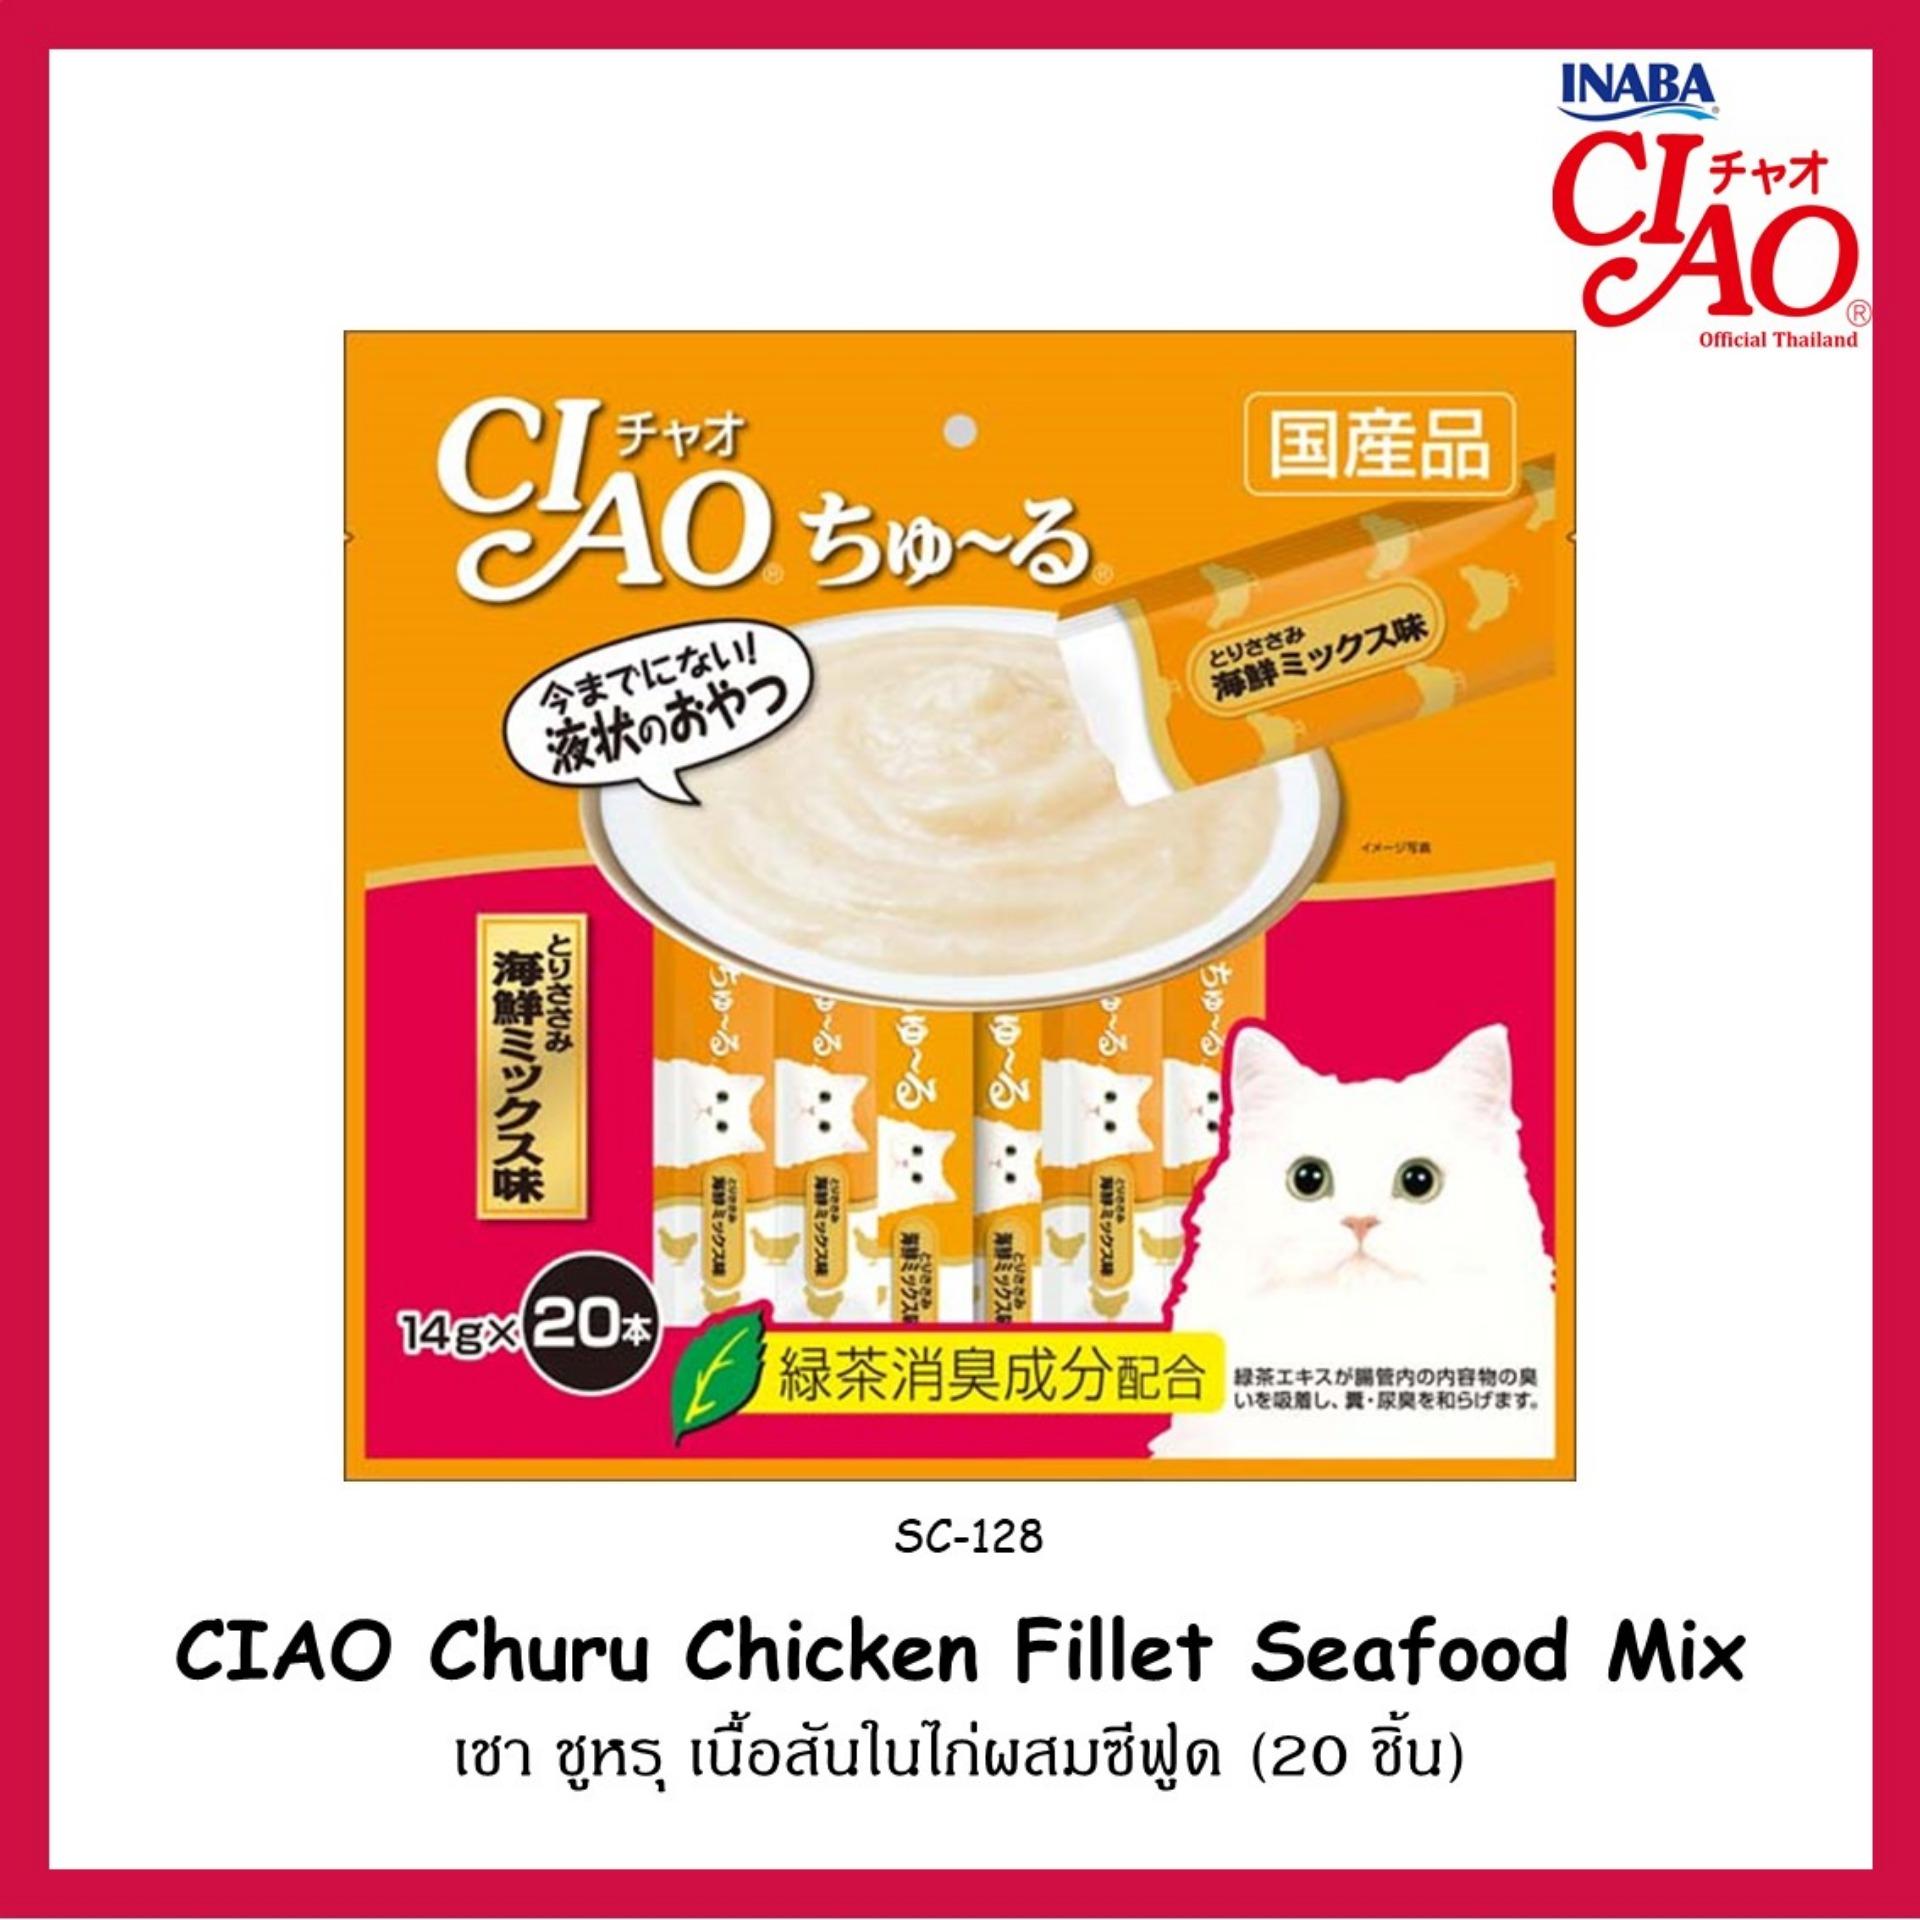 CIAO Chu ru Chicken Fillet Seafood Mix เชา ชูหรุ เนื้อสันในไก่ผสมซีฟูด ขนาด 14 กรัม x 20 ซอง จำนวน 1 แพ็ค